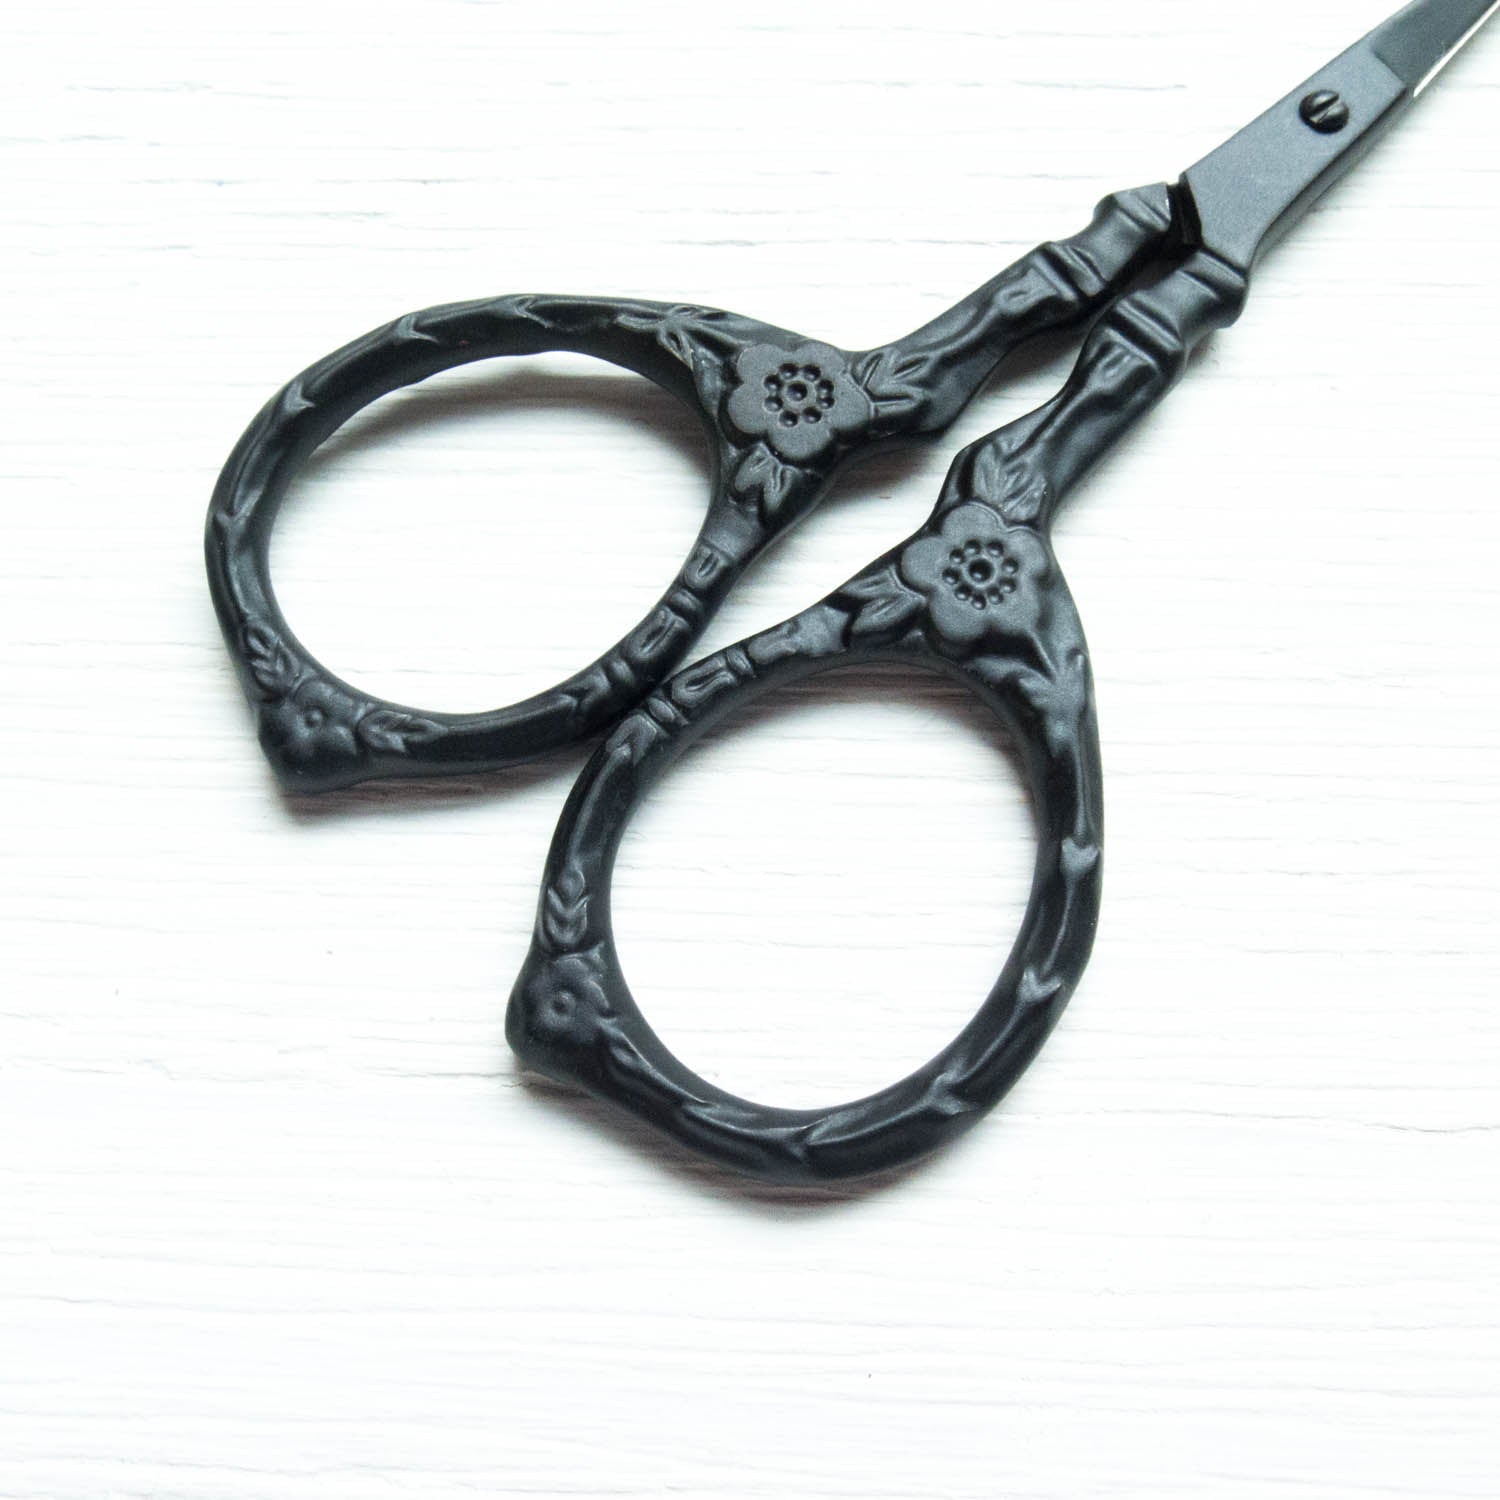 Large Handle Primitive Scissors